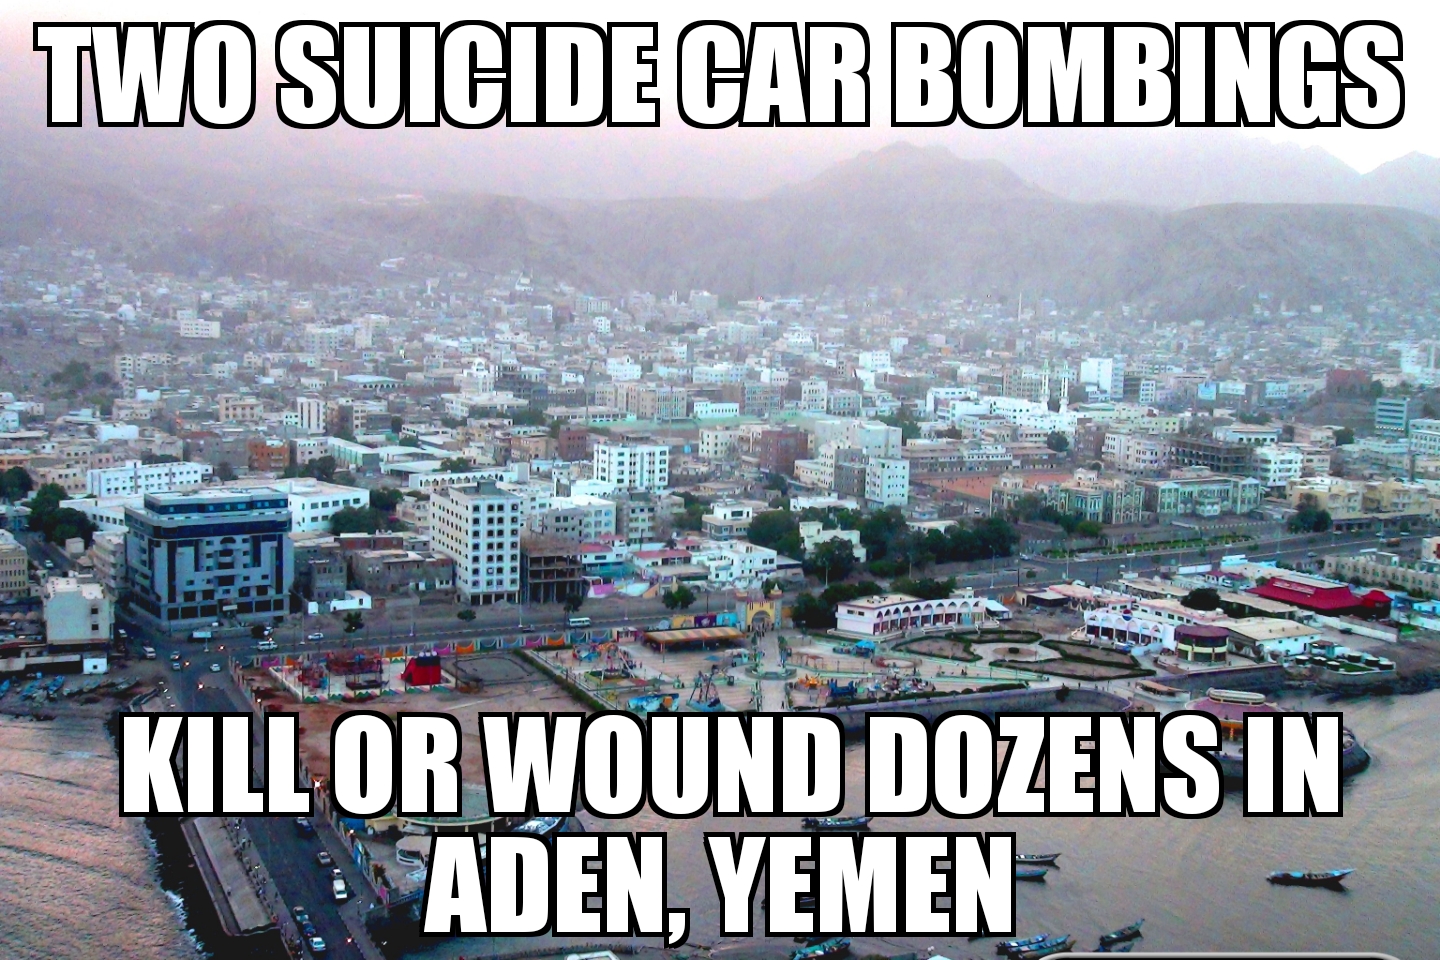 Aden suicide car bombings